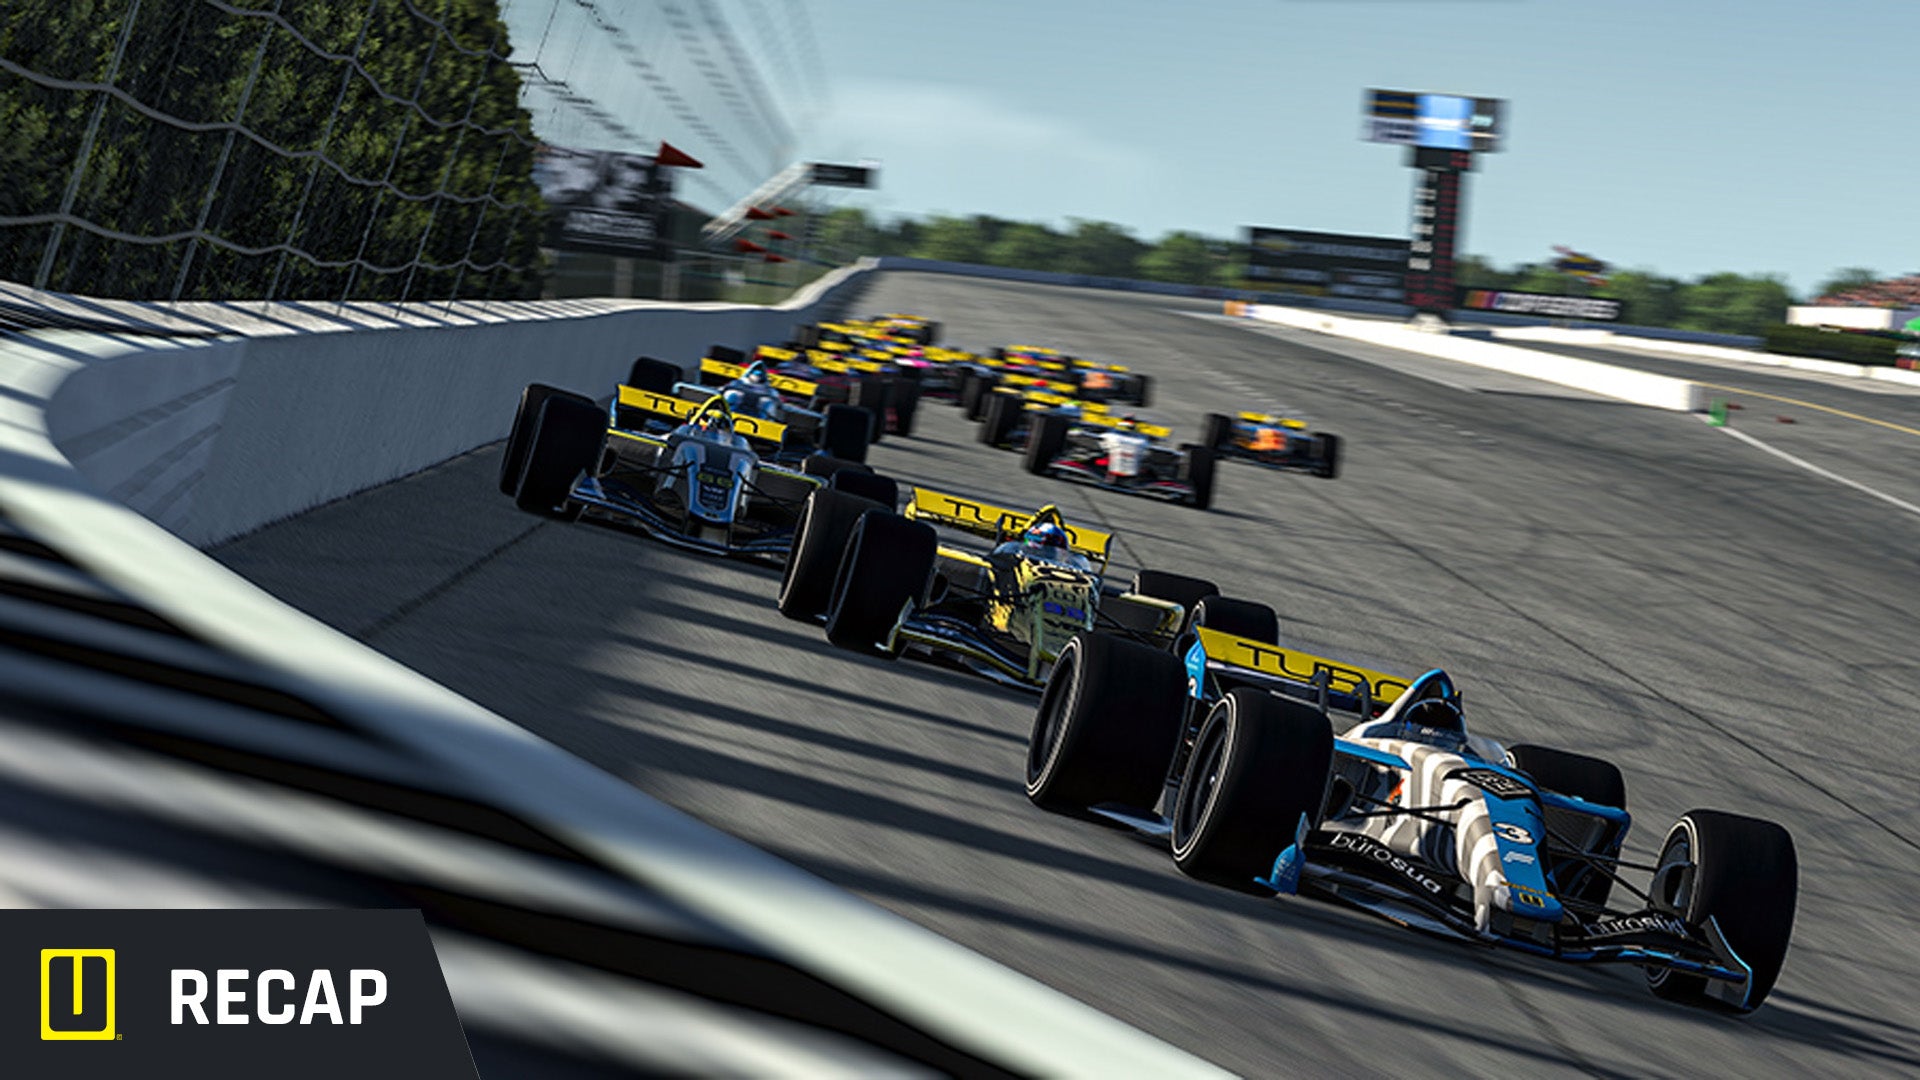 Grand Prix Turn Racing iRacing Series Race 9 Recap